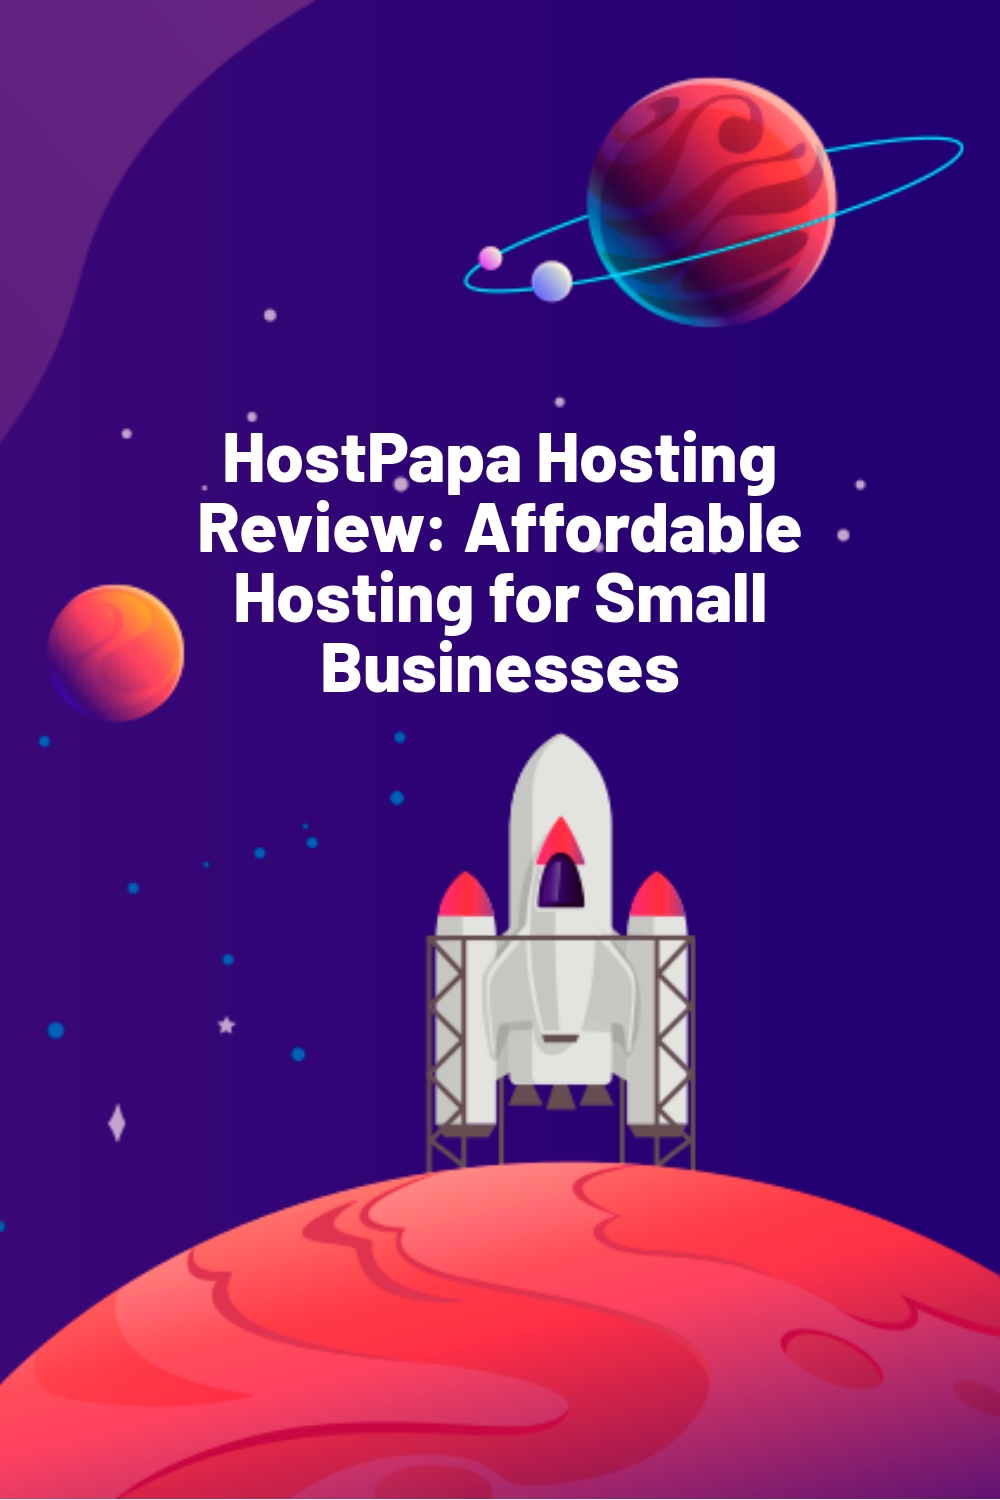 HostPapa Hosting Review: Affordable Hosting for Small Businesses